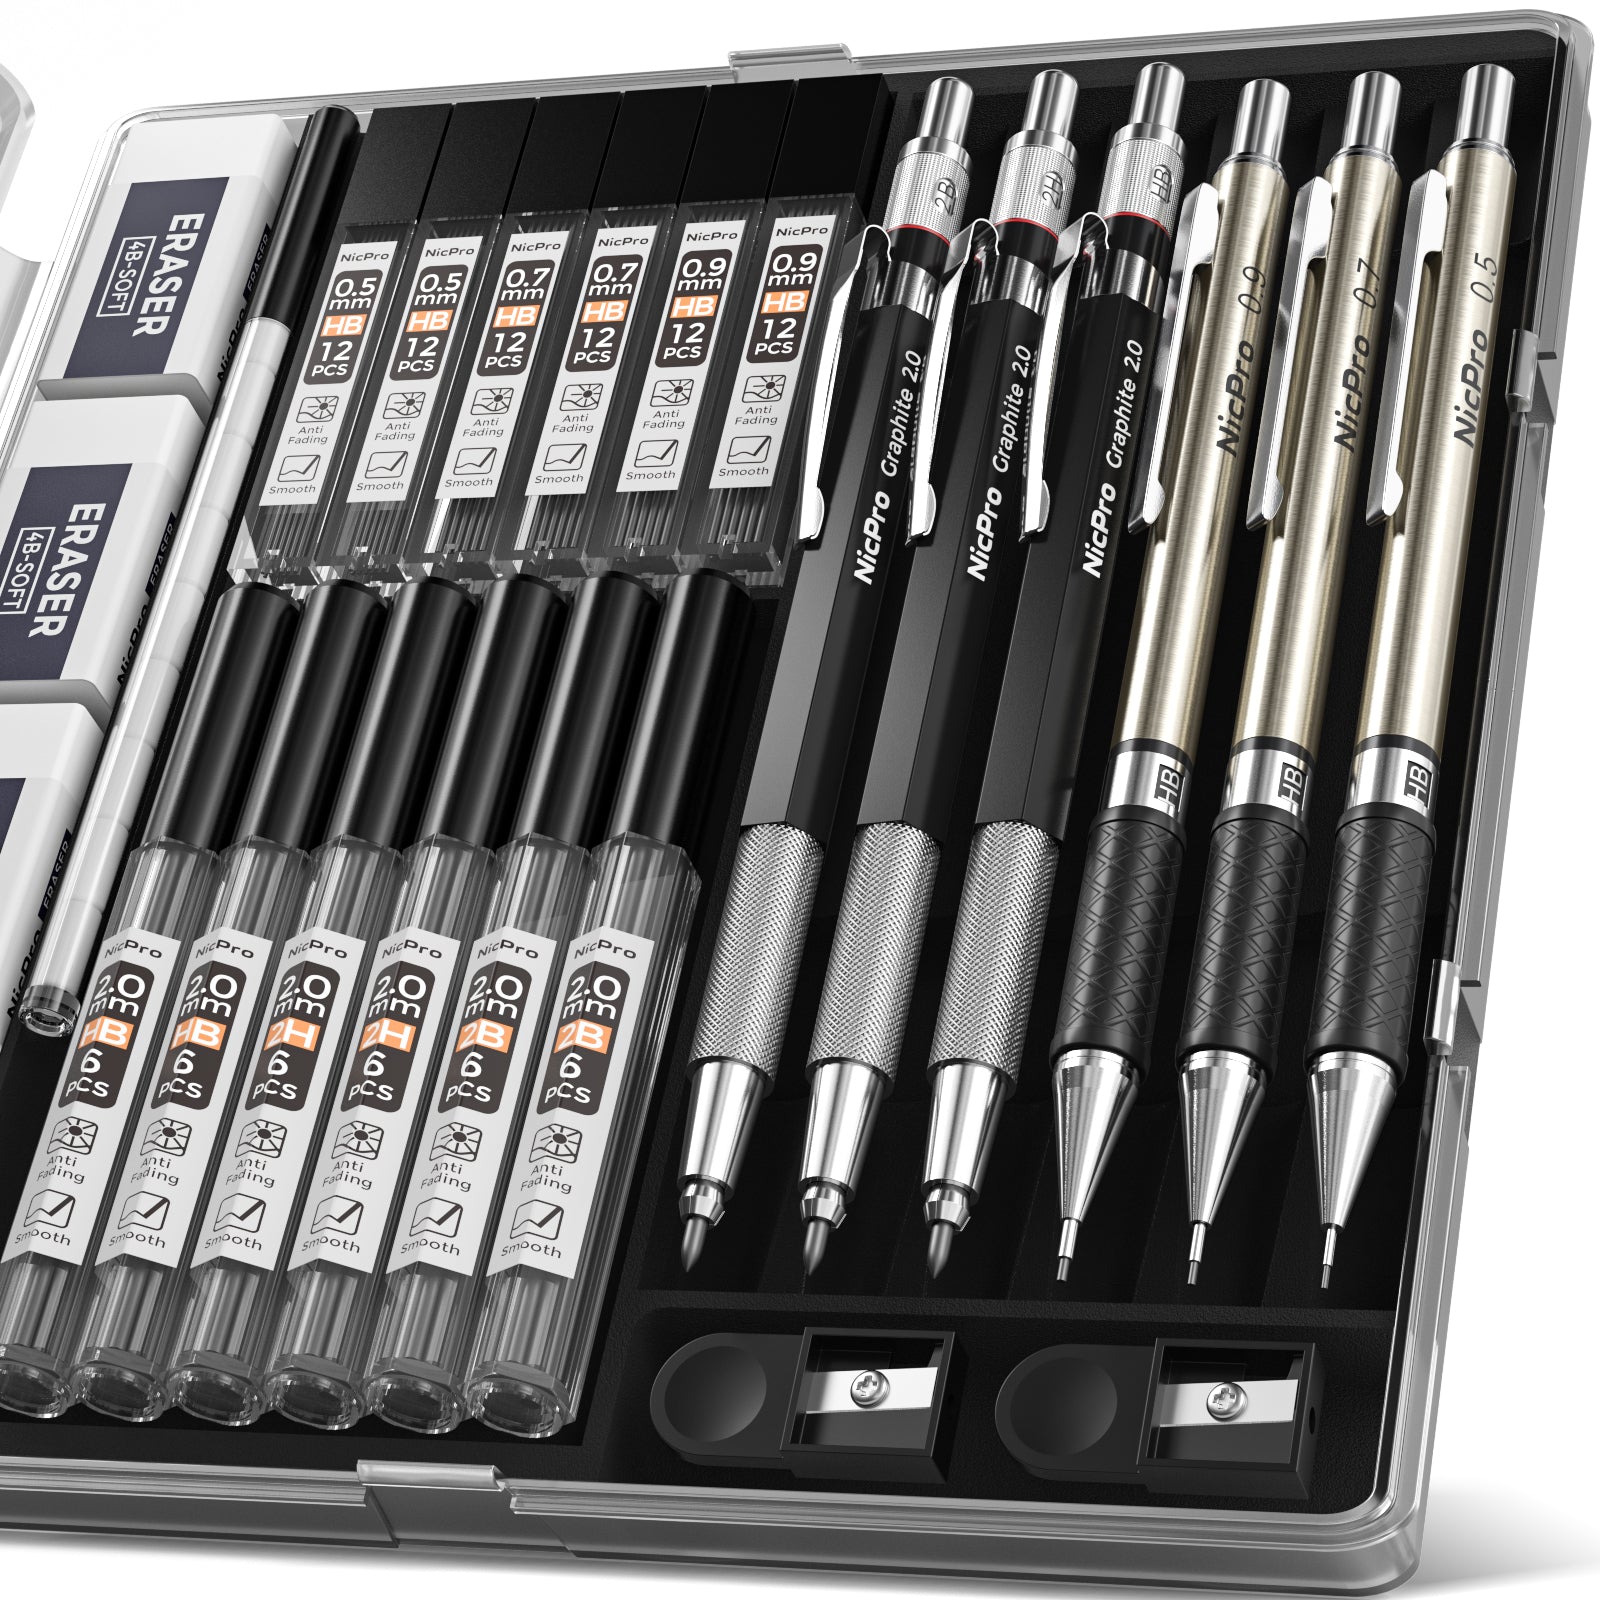 Nicpro 6PCS Art Mechanical Pencils Set, 3 PCS Metal Drafting Pencil 0.